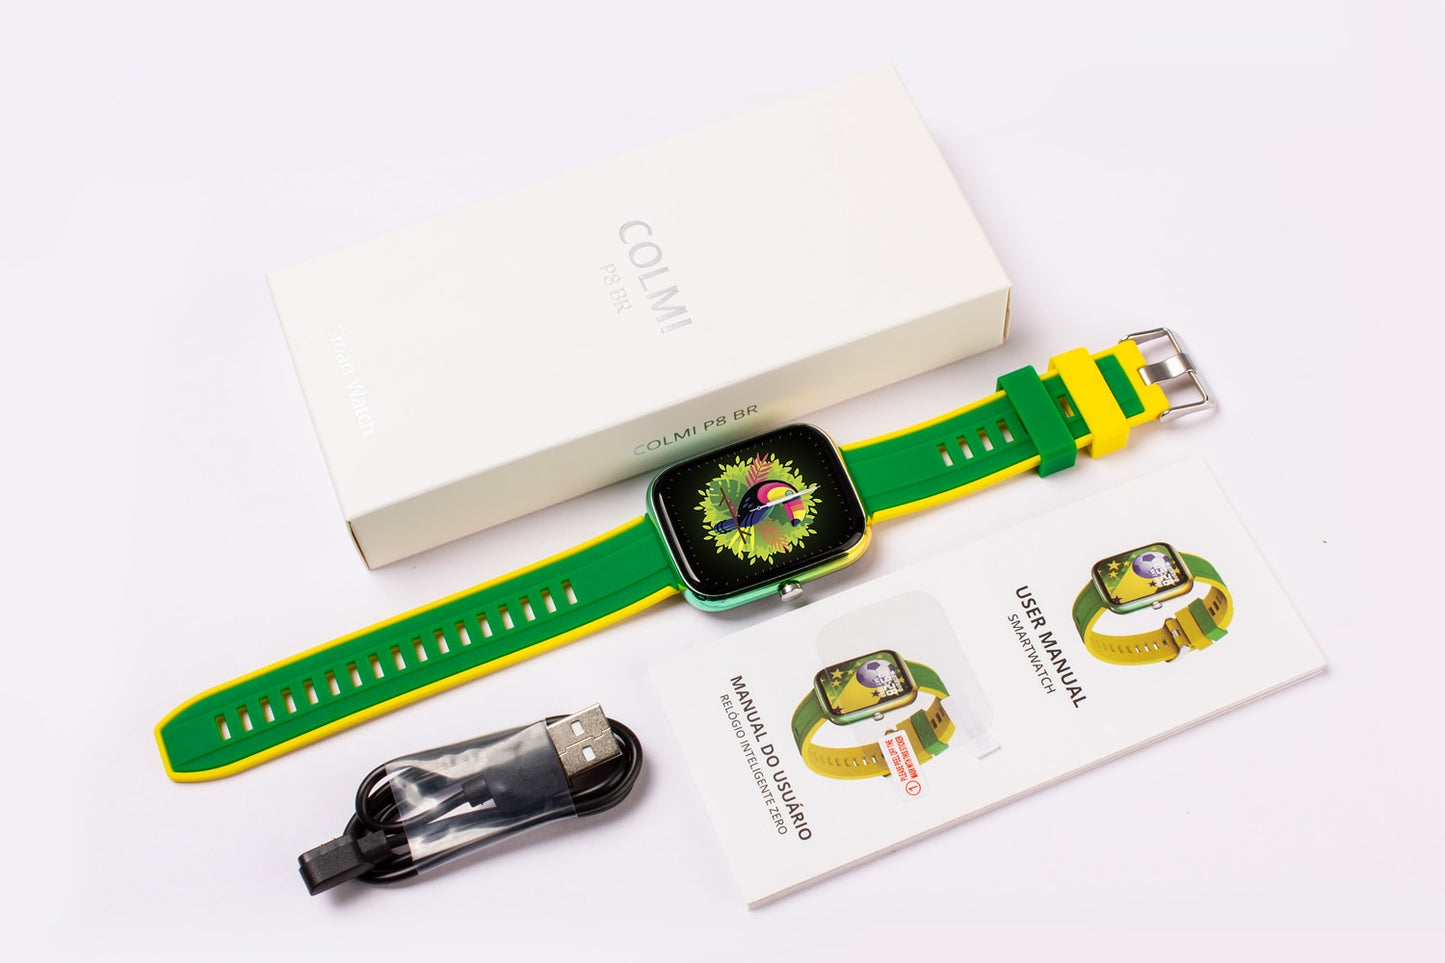 Relógio Smartwatch Colmi® P8BR IP67